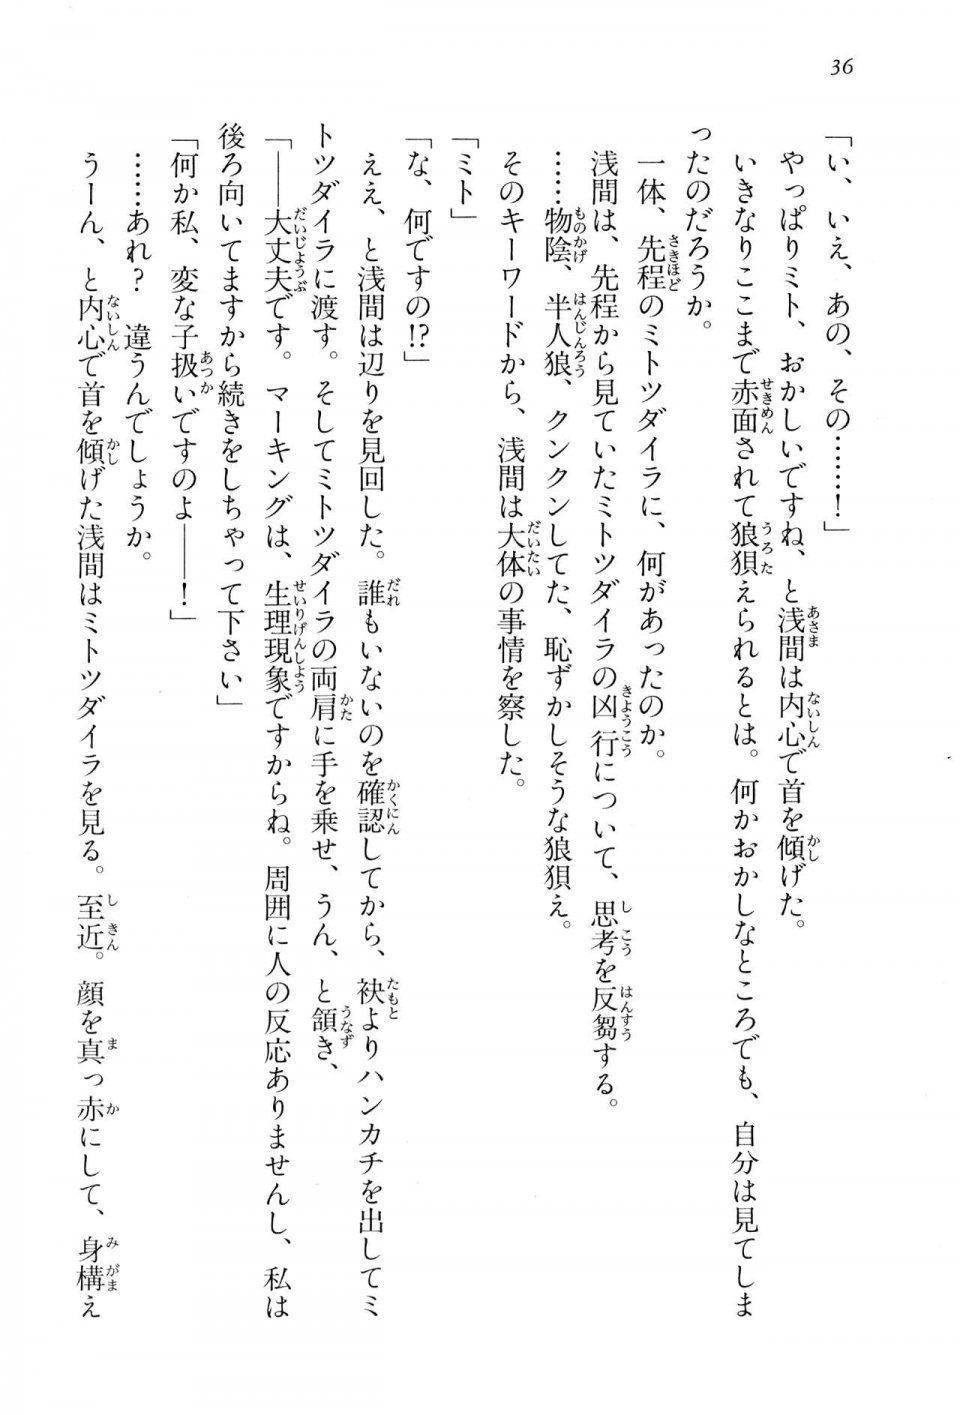 Kyoukai Senjou no Horizon BD Special Mininovel Vol 2(1B) - Photo #40